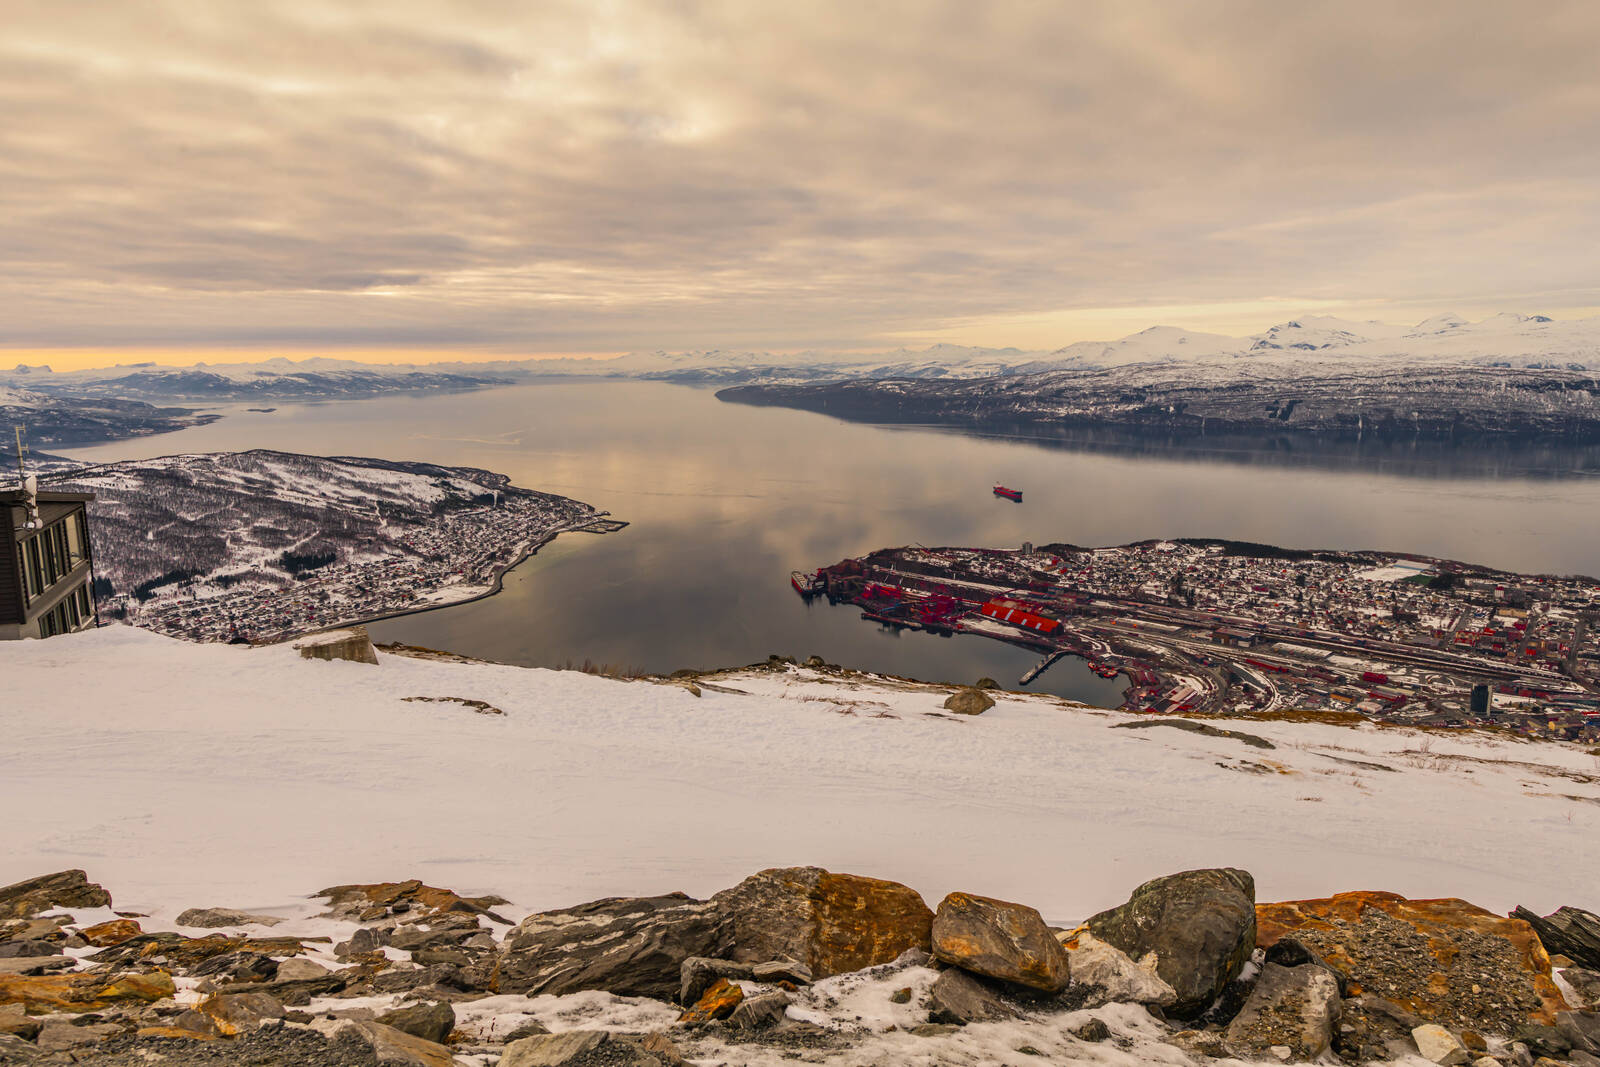 Image of View from Narvkfjellet by michael bennett